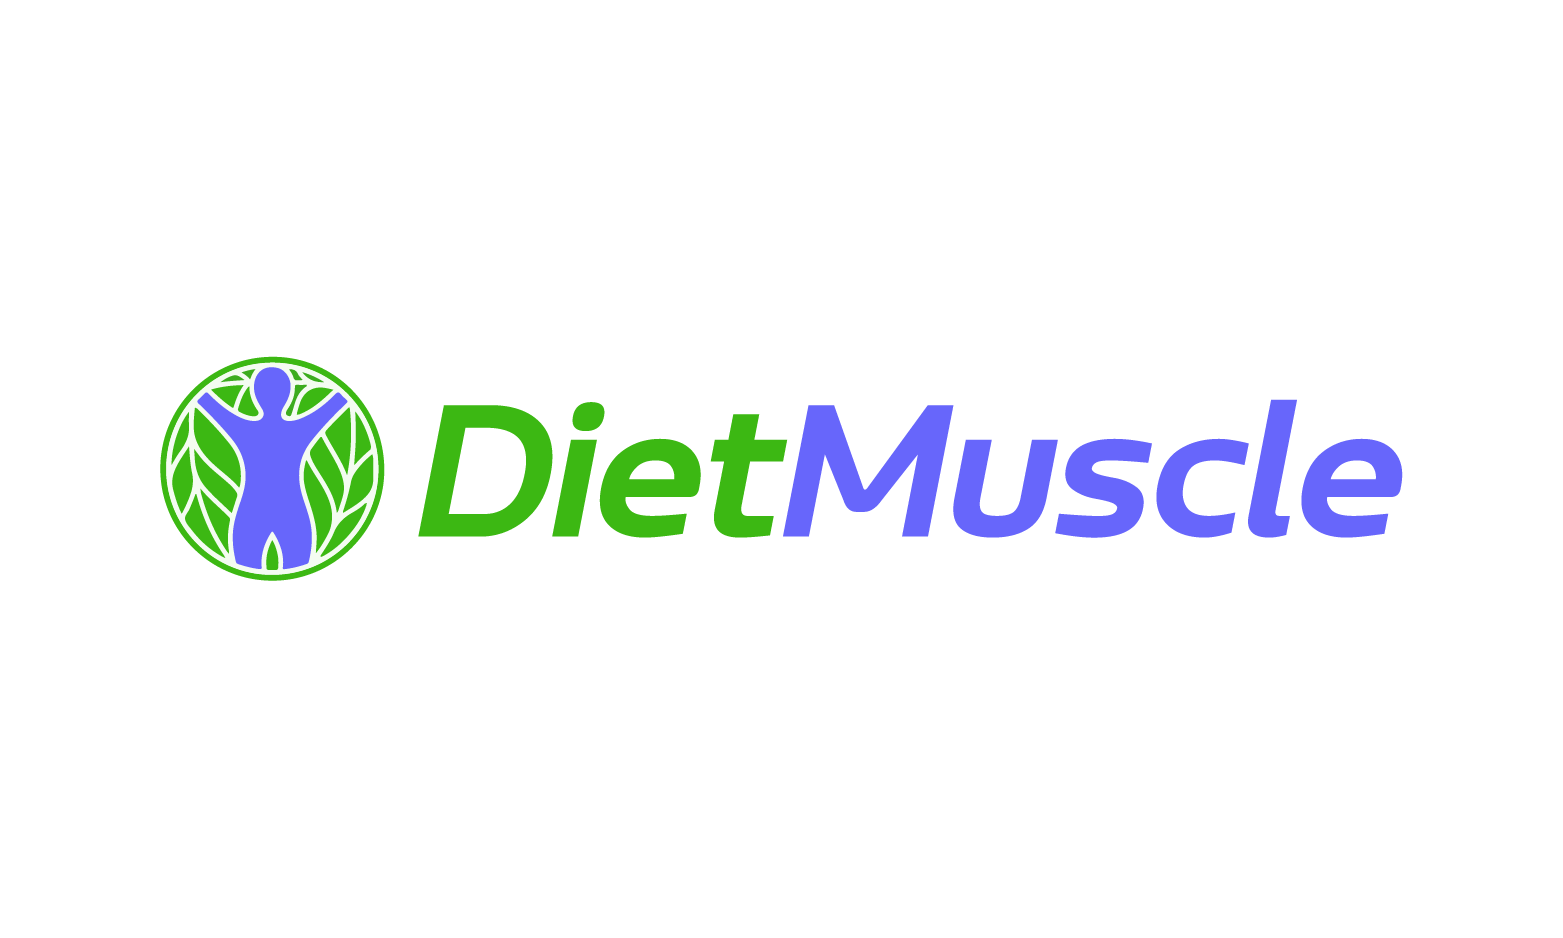 DietMuscle.com - Creative brandable domain for sale